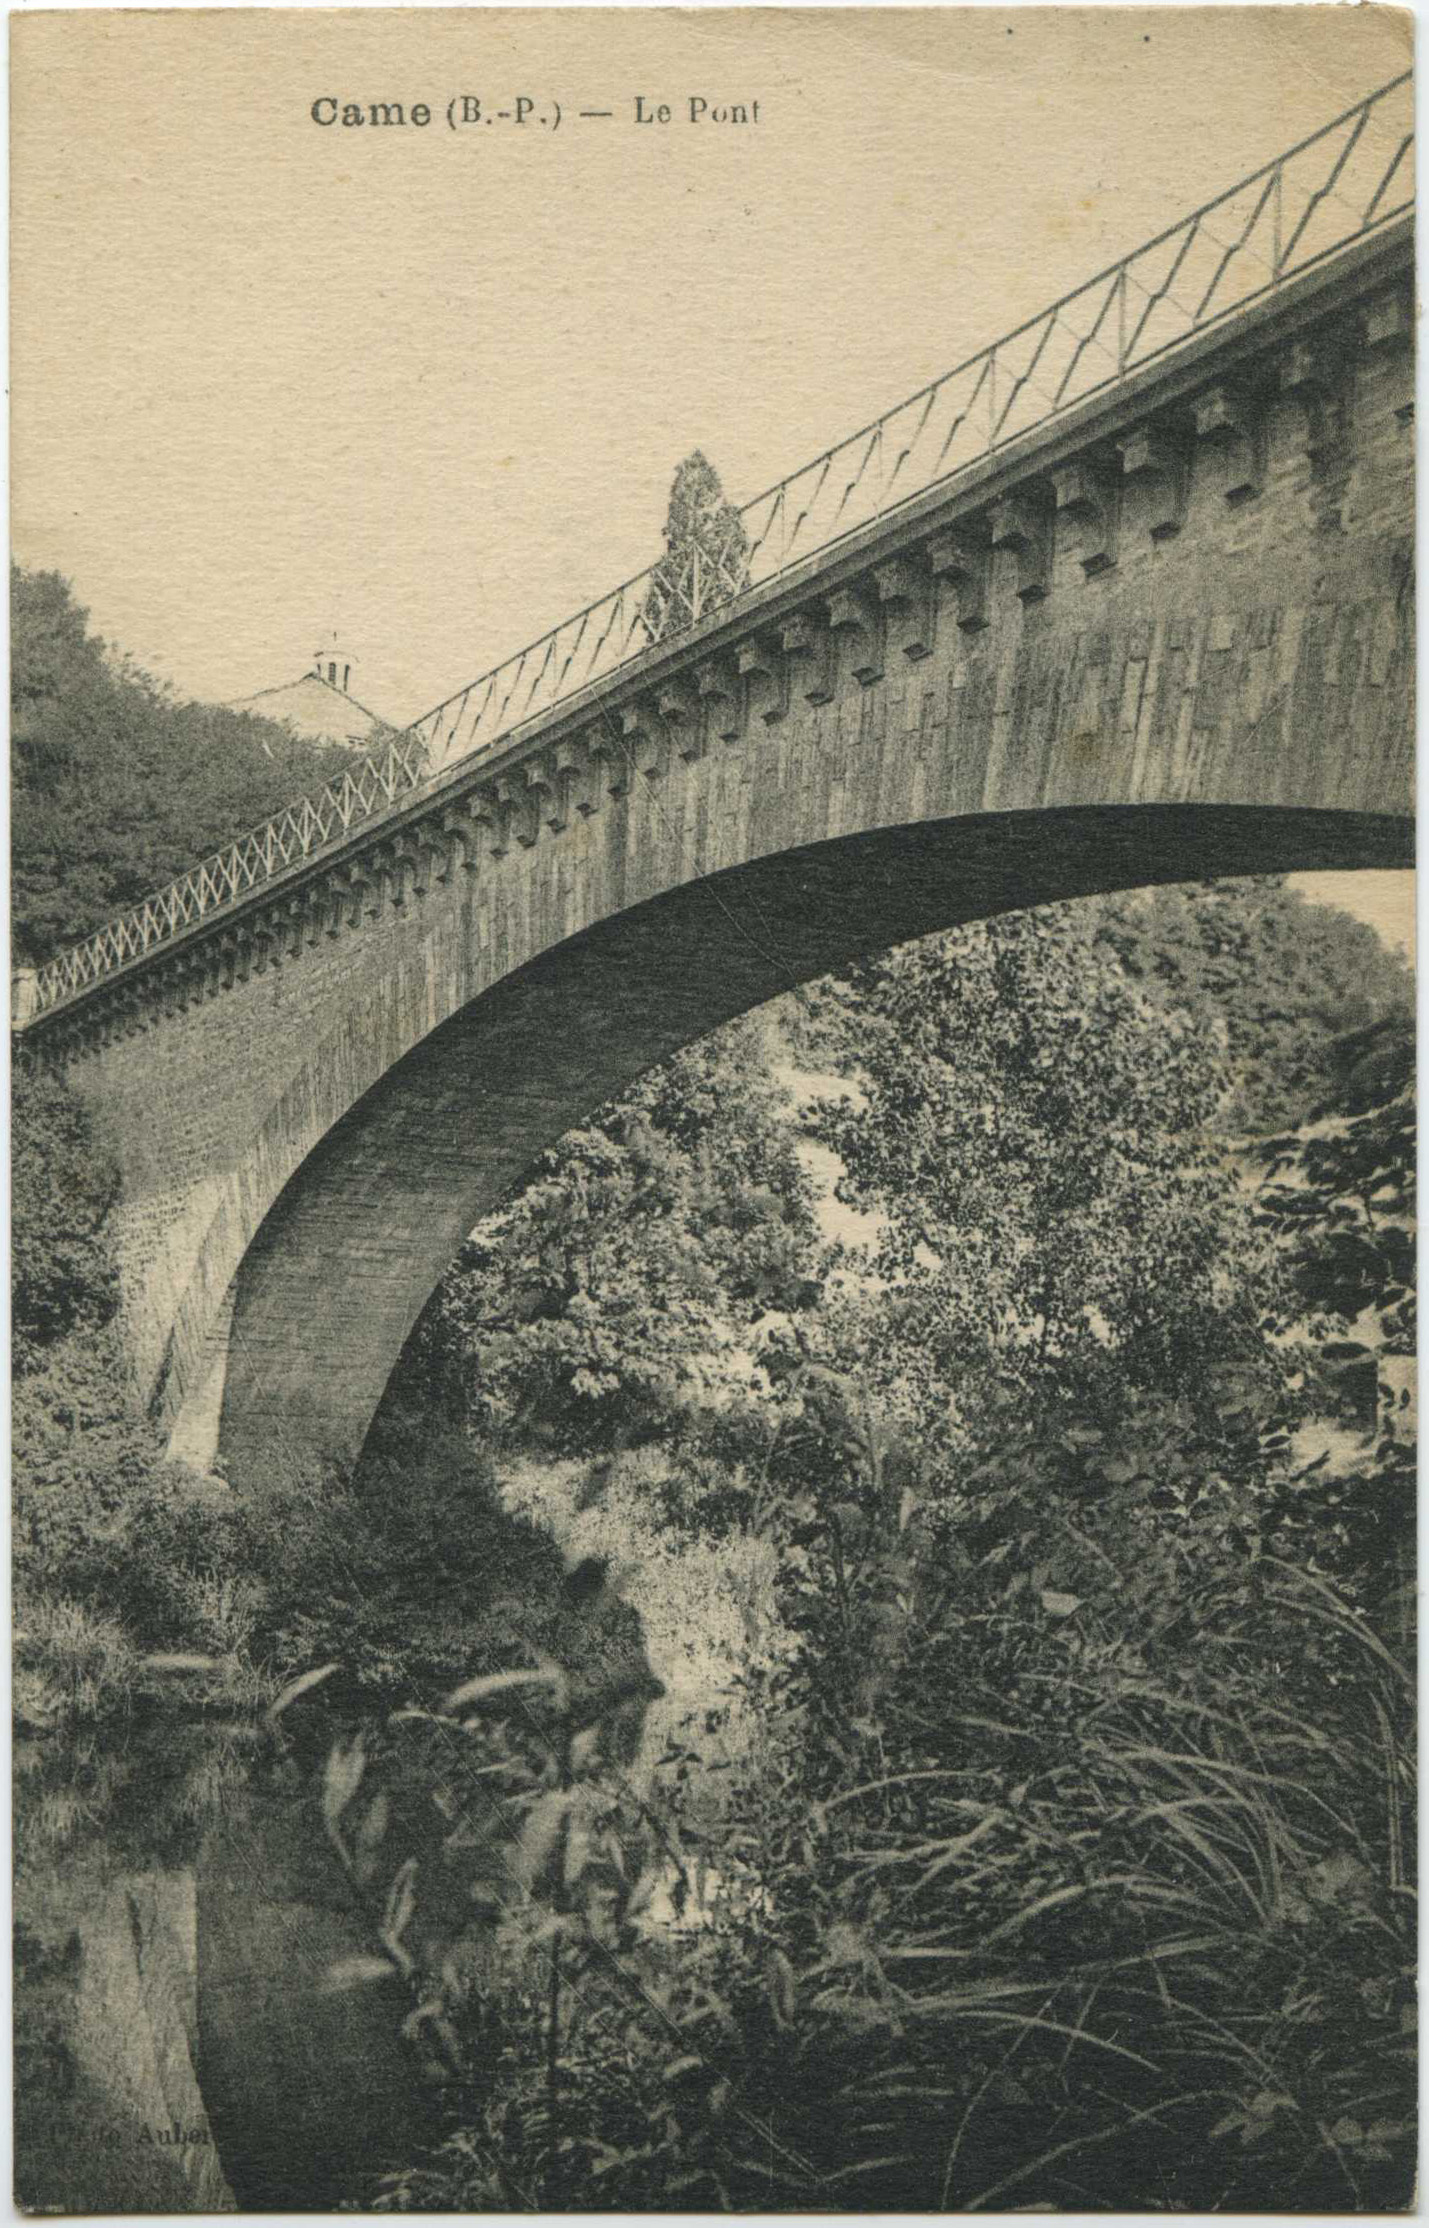 Came - Le Pont